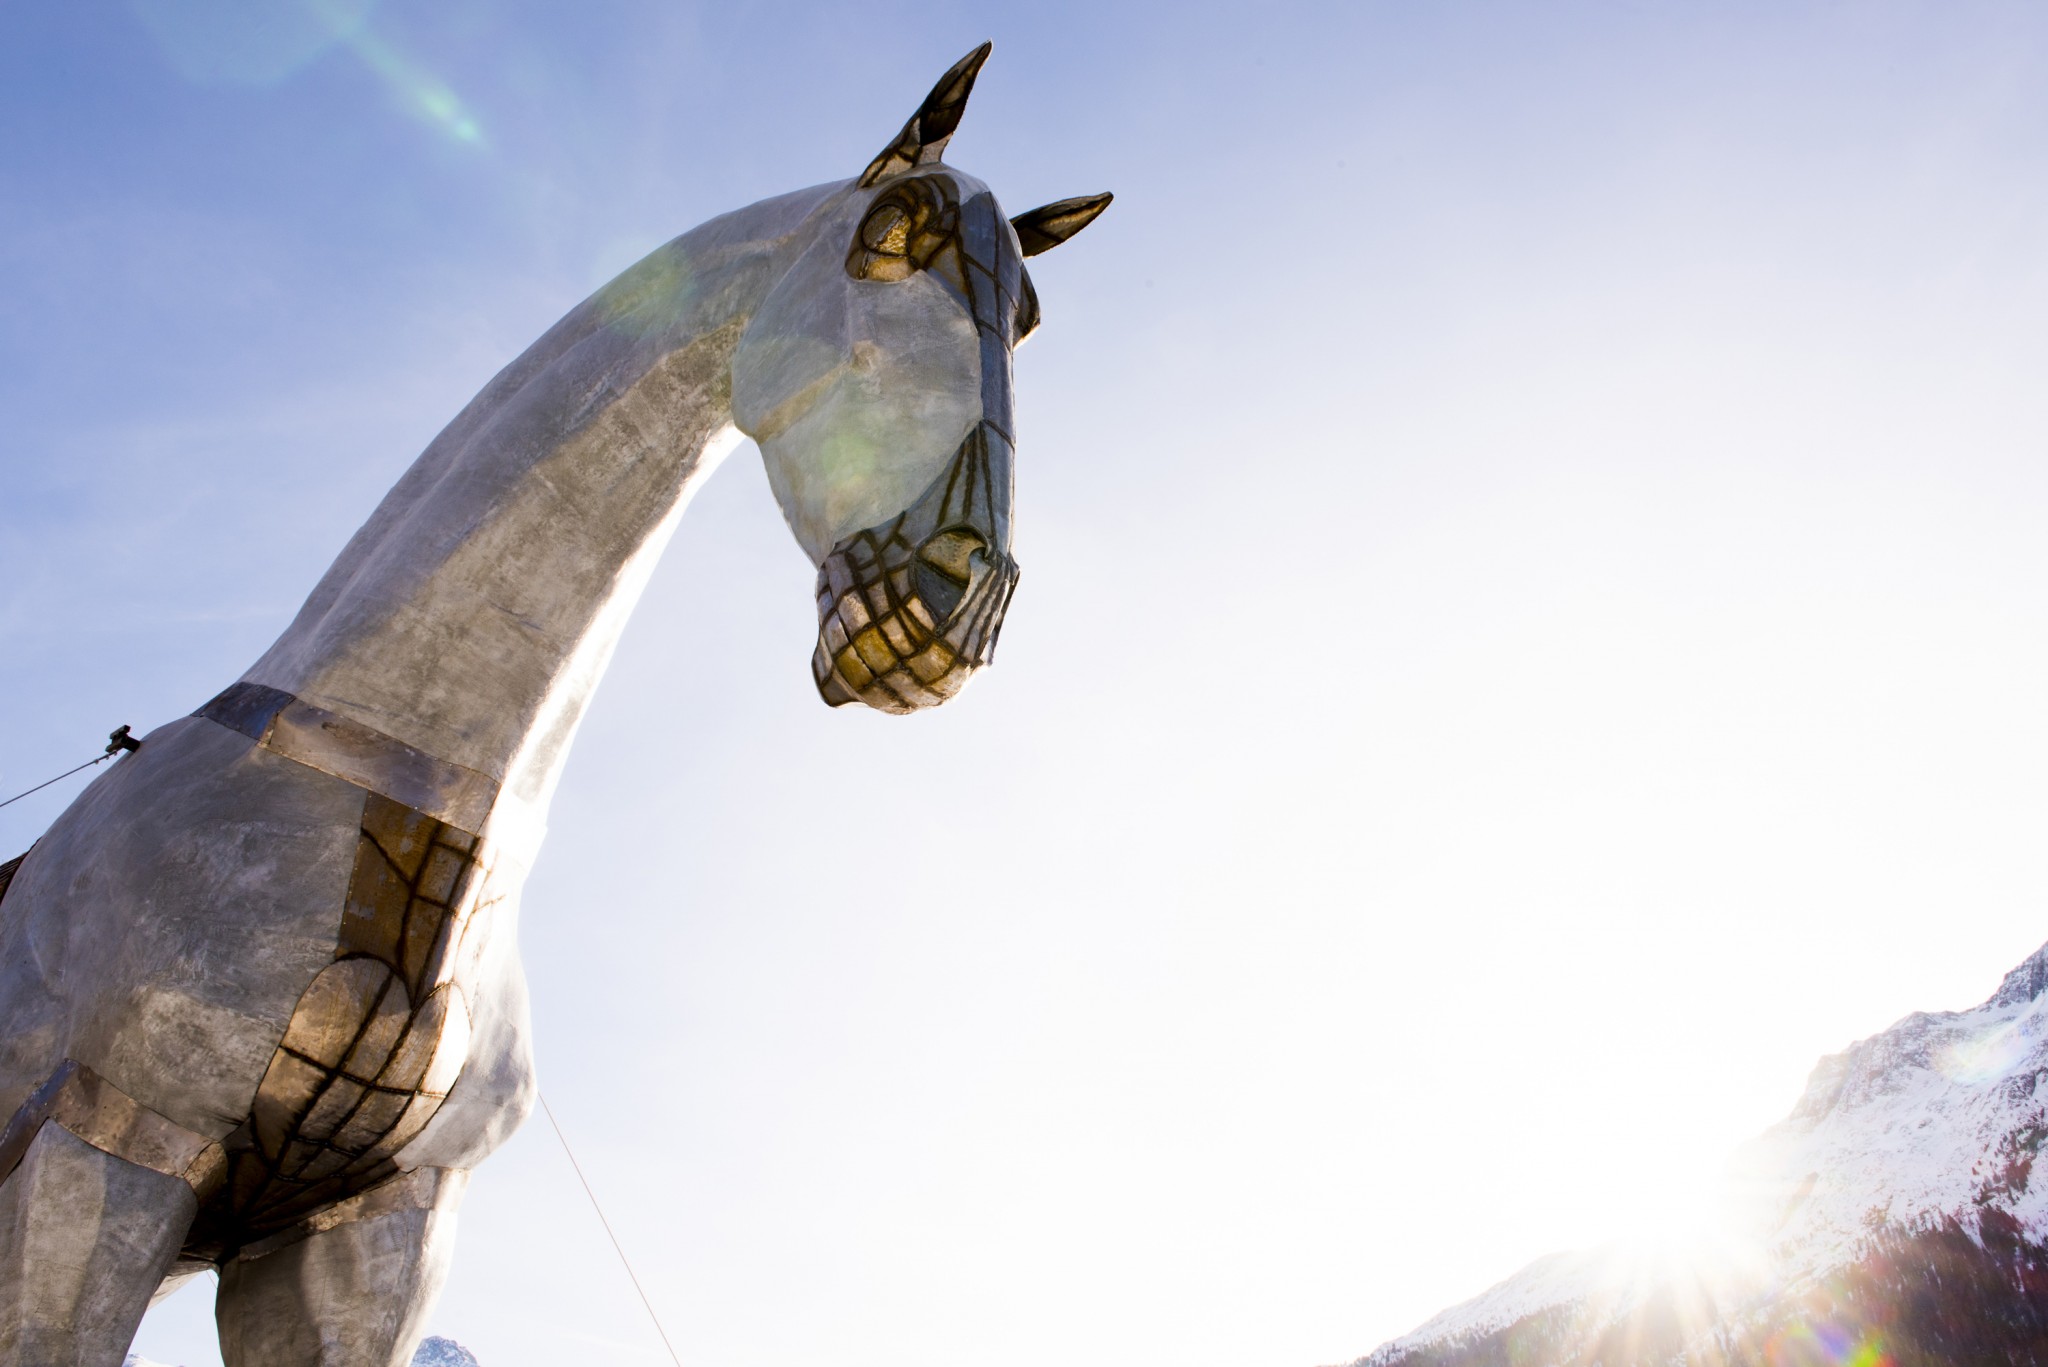 Trojan Horse Appears on Lake at St Moritz